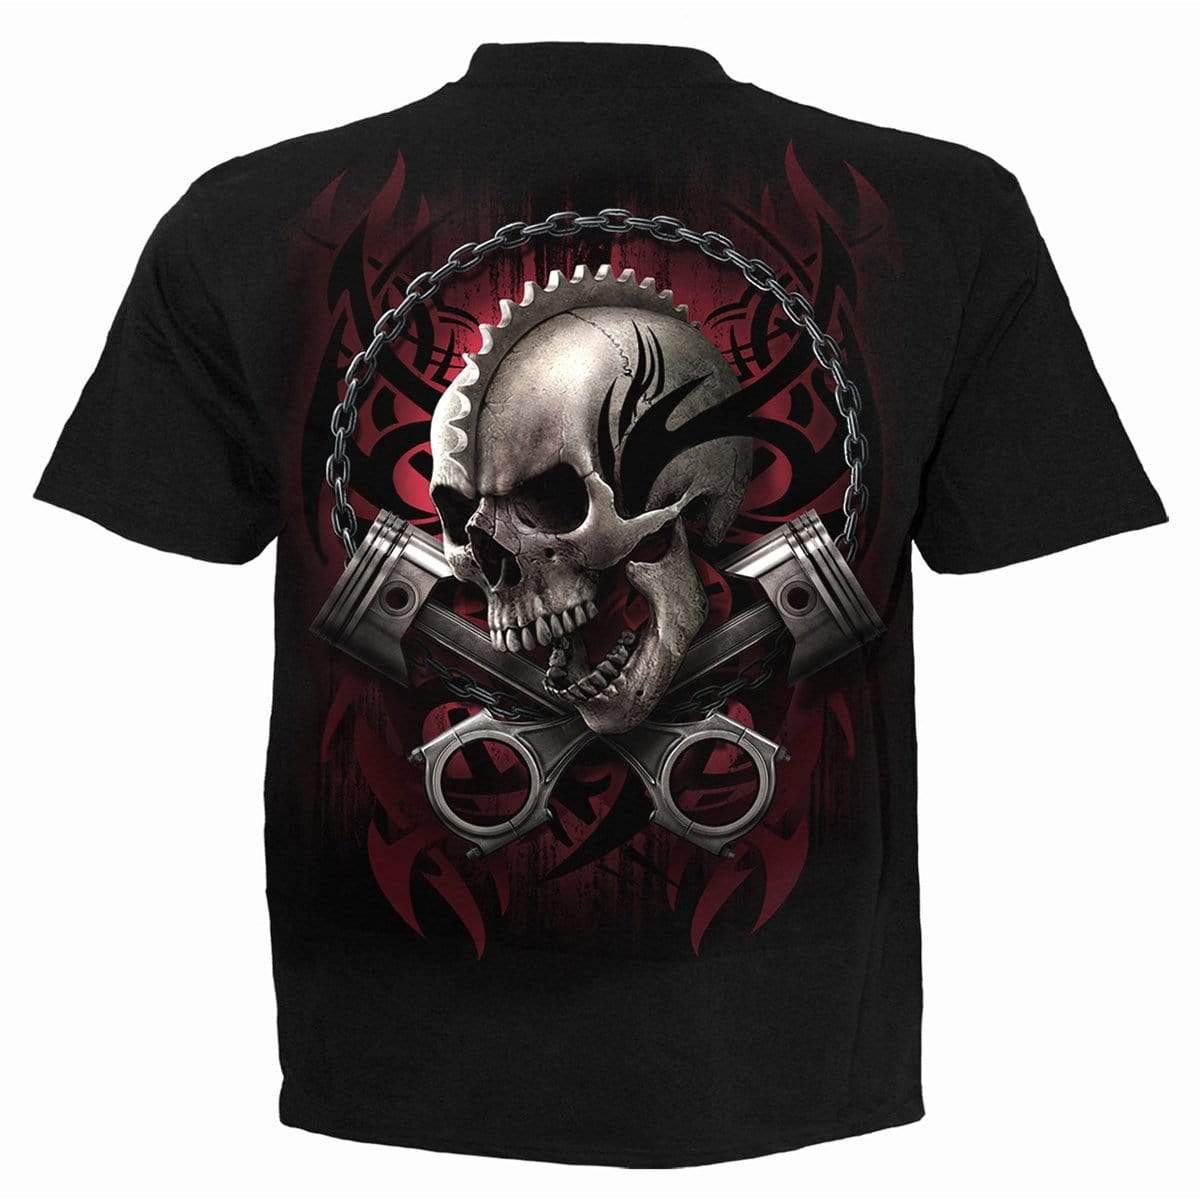 SOUL RIDER - T-Shirt Black - Spiral USA